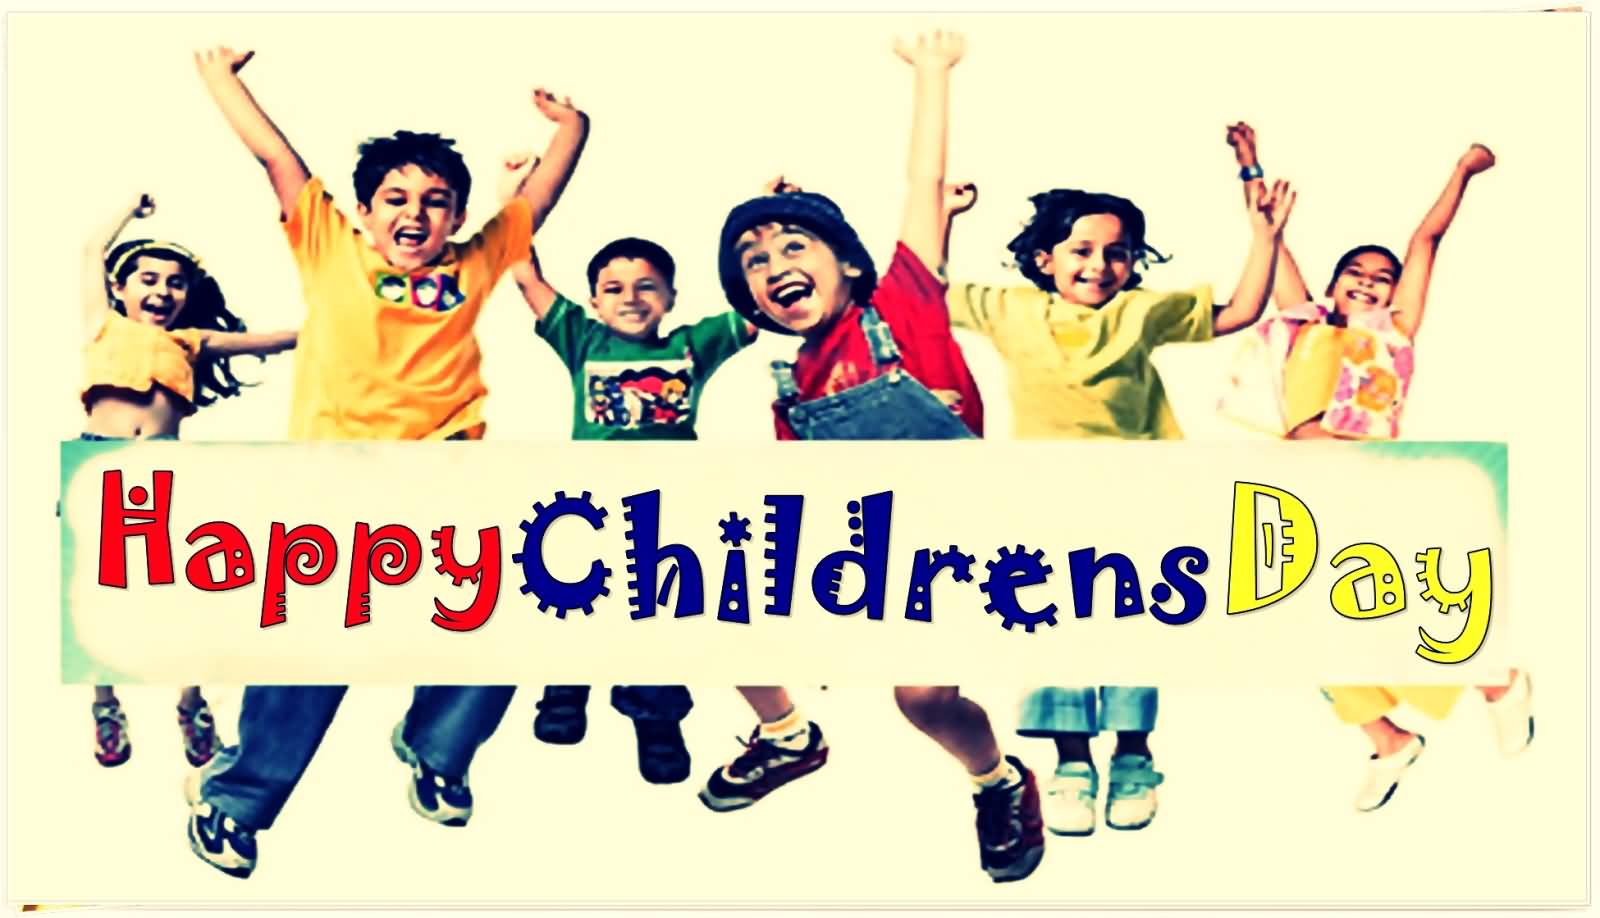 Happy Children's Day Greetings 2016